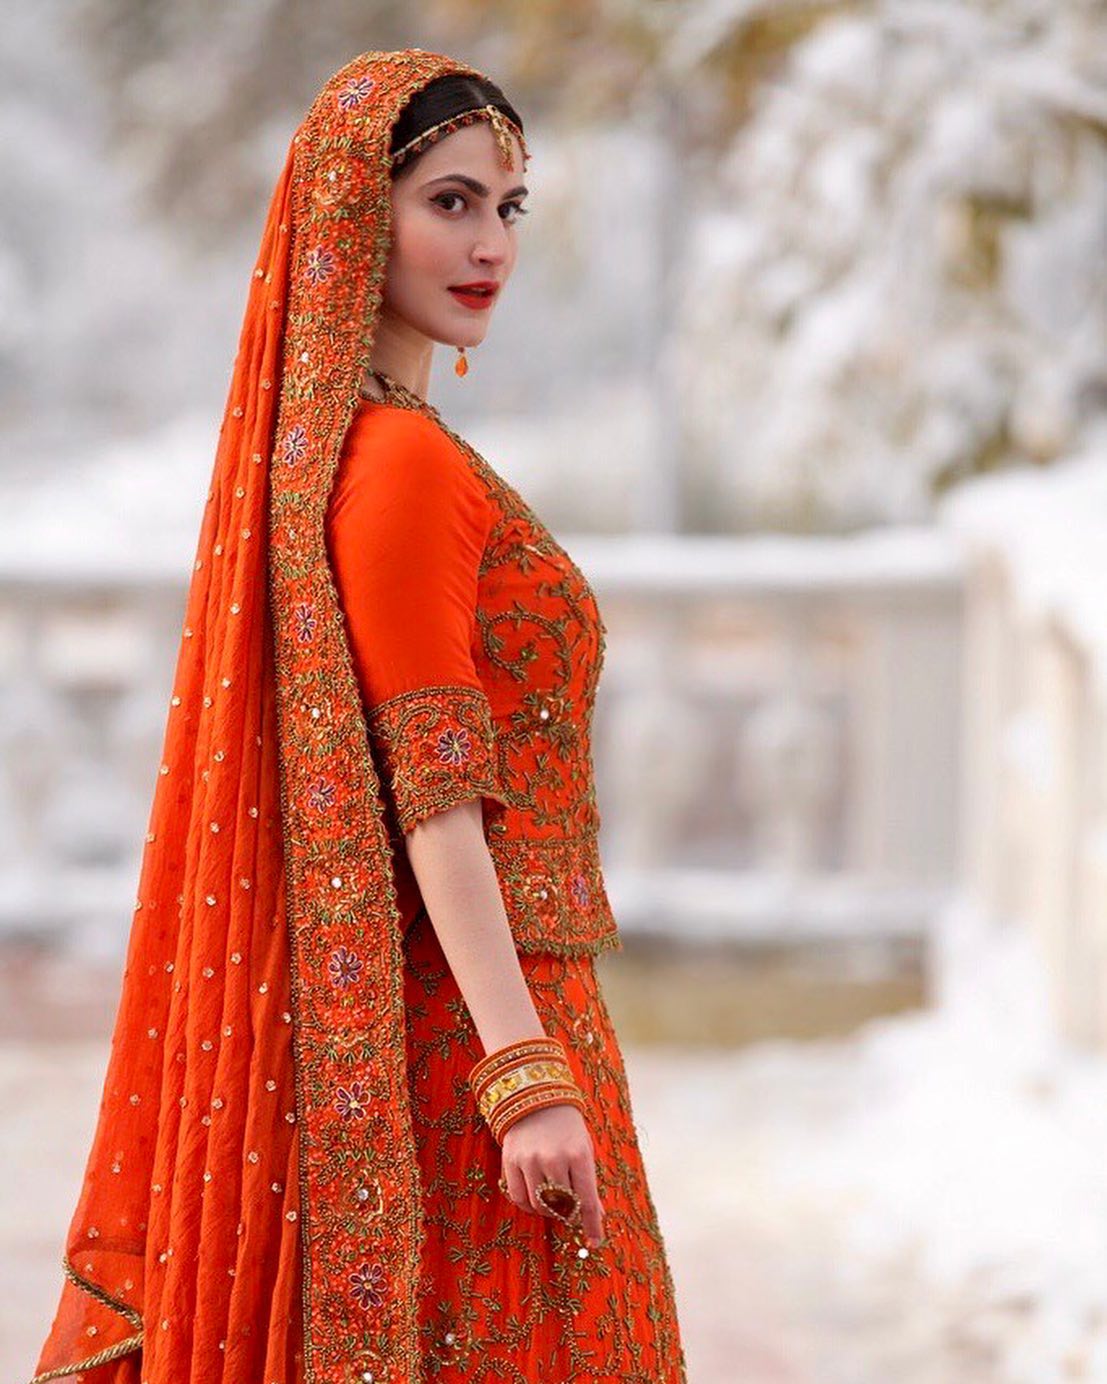 Shivaleeka Oberoi Look Enchantress In Orange Embroidered Lehenga Choli Set With Minimalist Jewellery - Exclusive Outfits & Looks